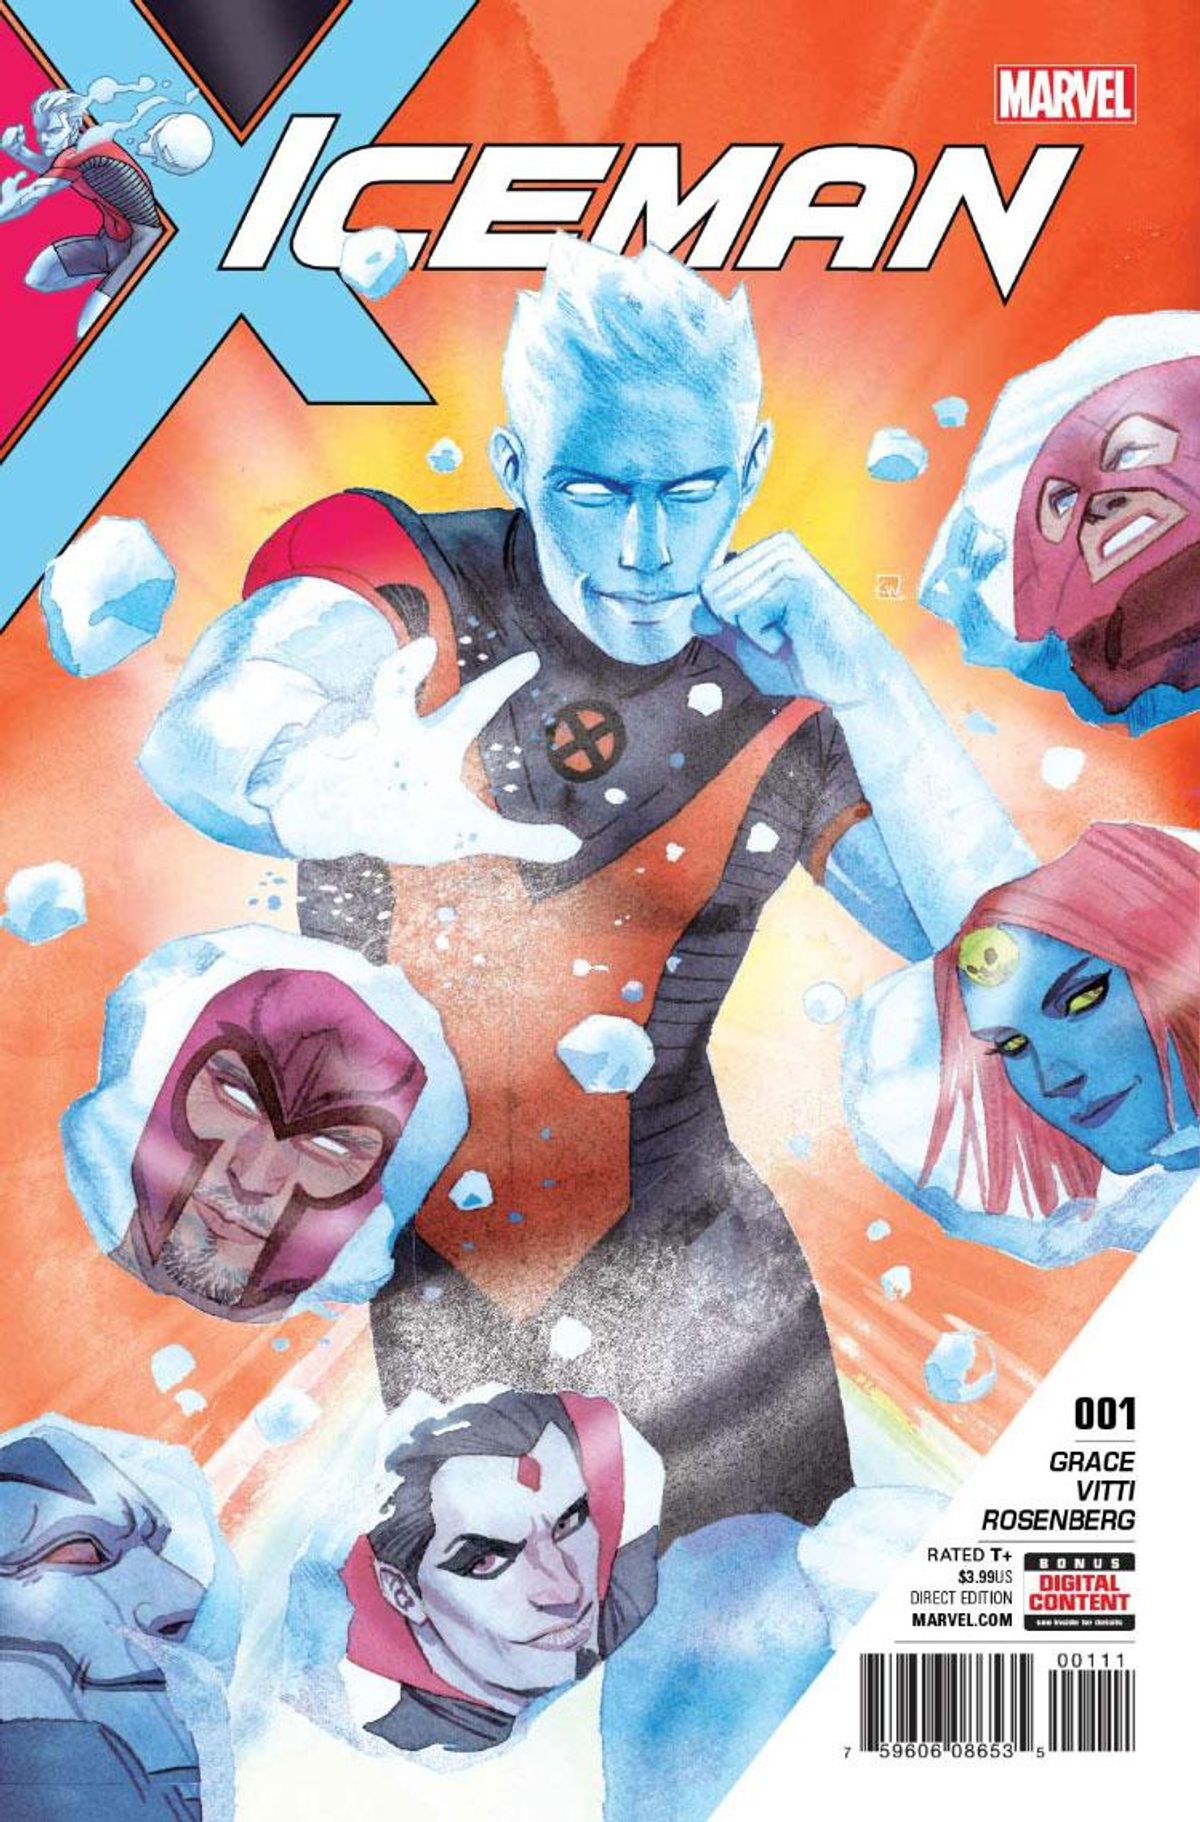 Marvel Comics’ Iceman Cometh 